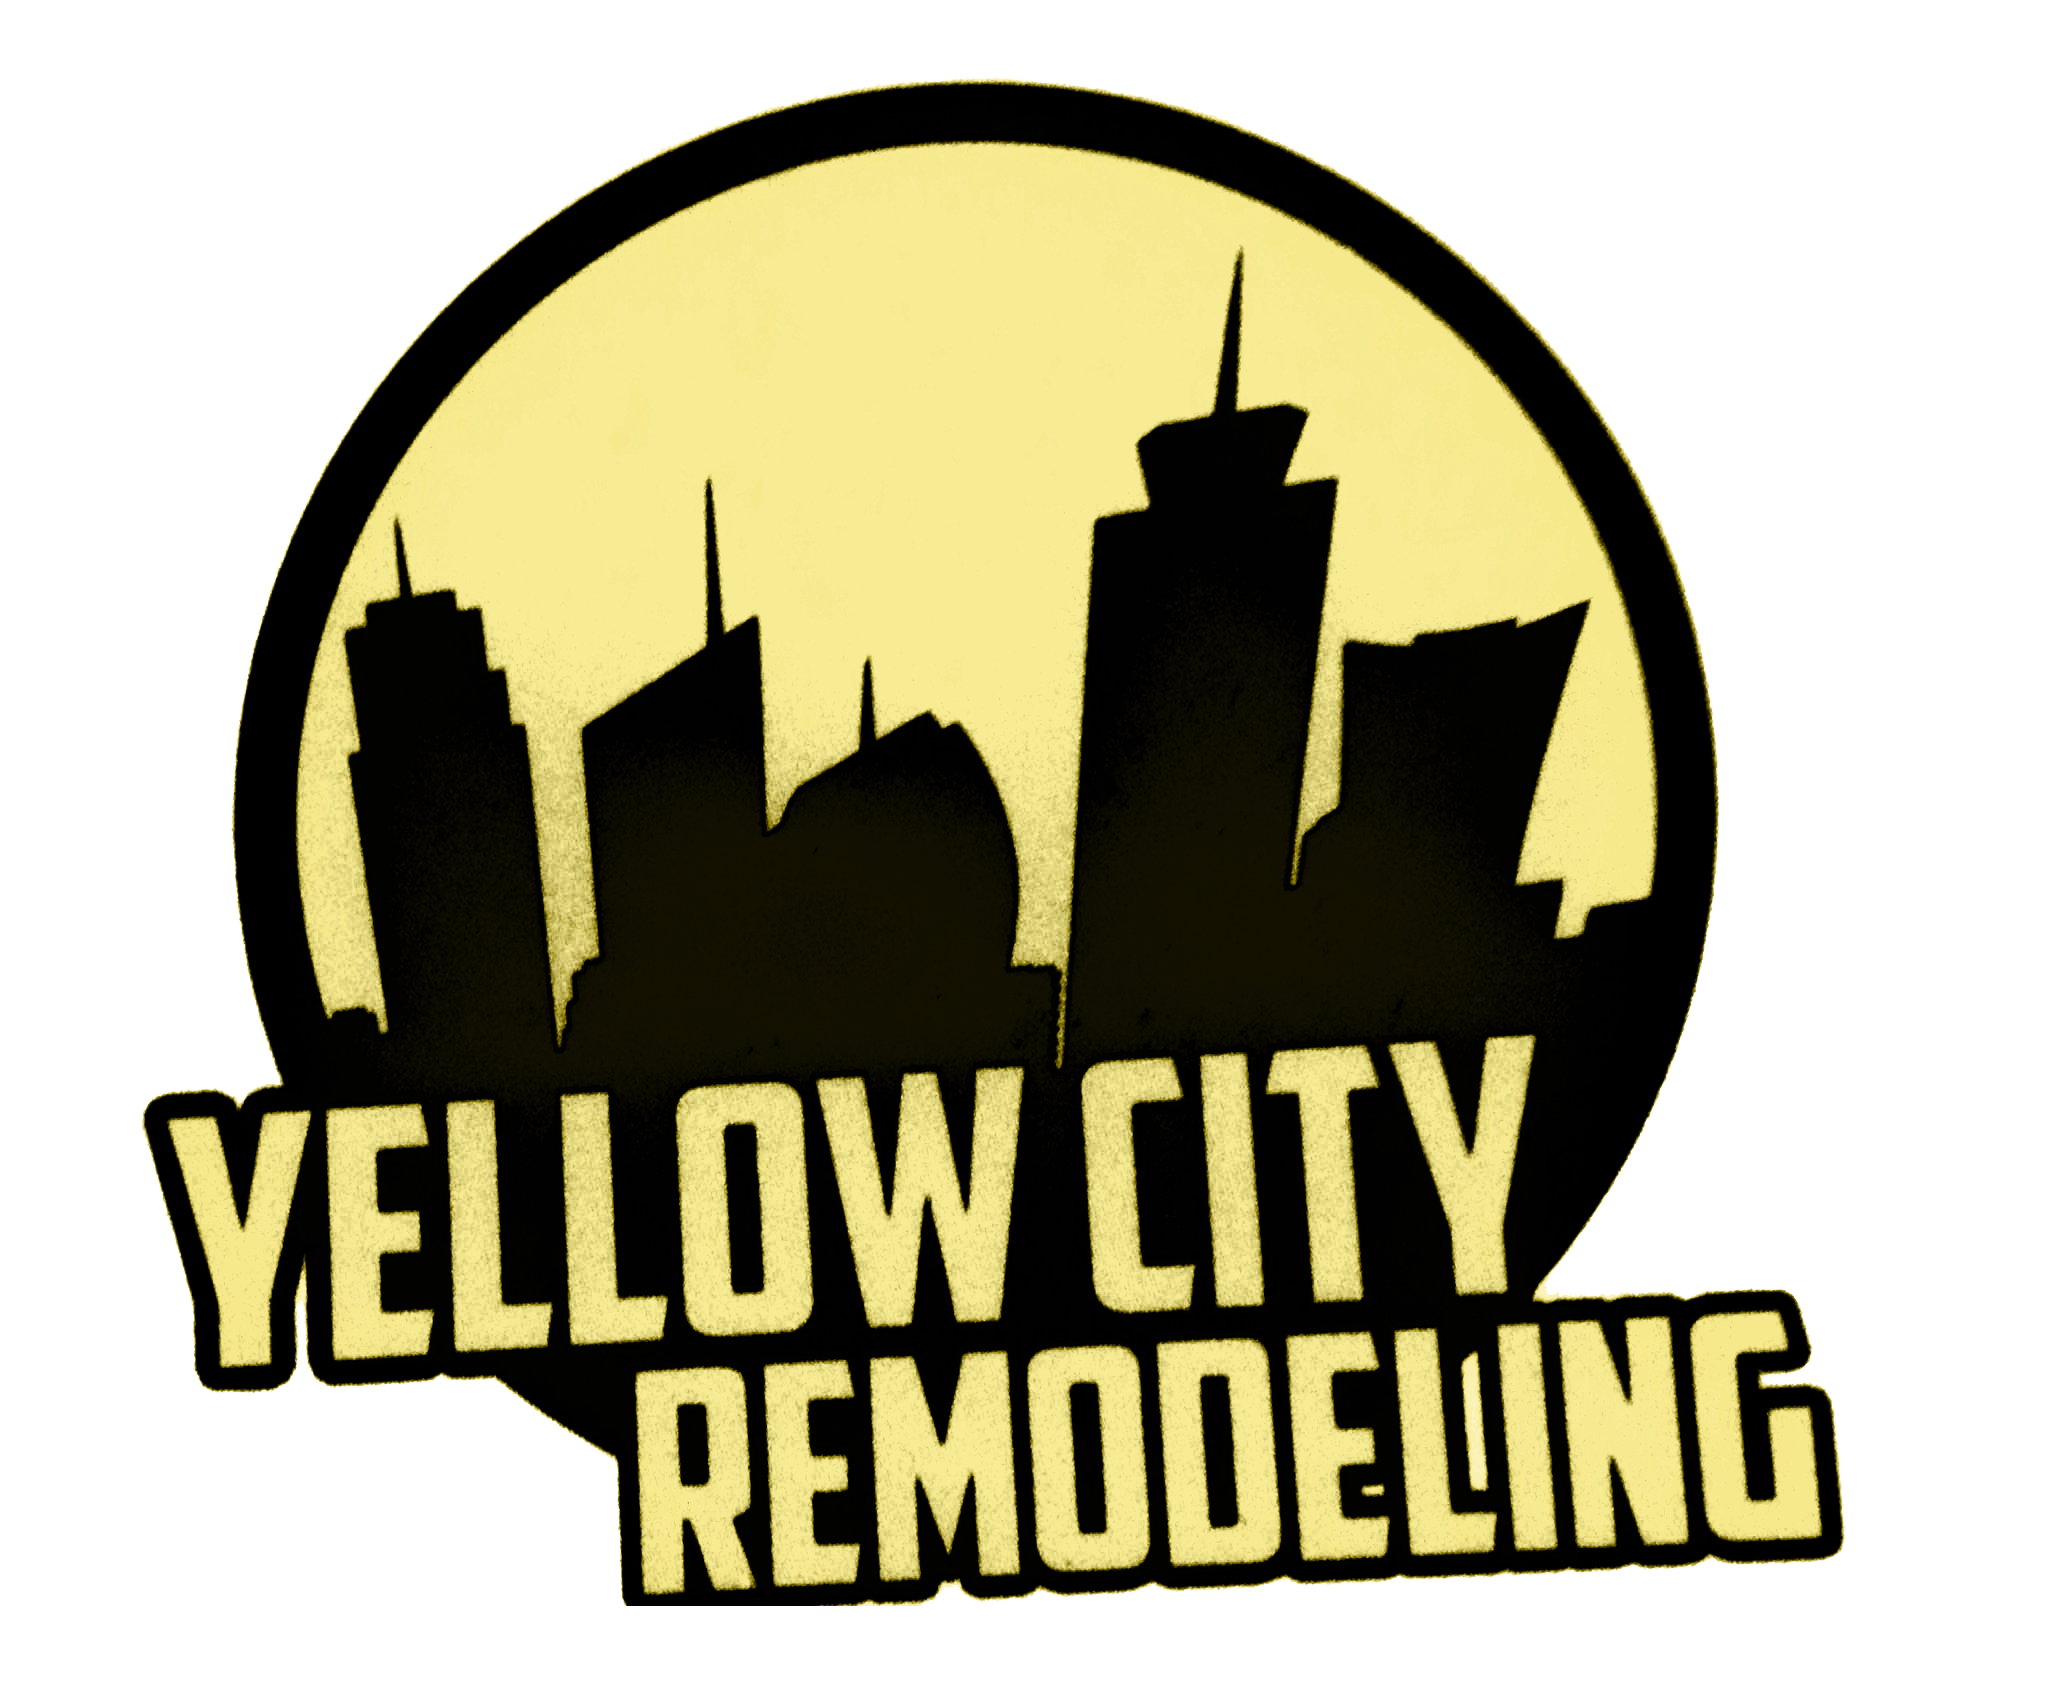 Yellow City Logo - Remodeling Contractor, Exterior Home Improvement: Amarillo, Canyon ...